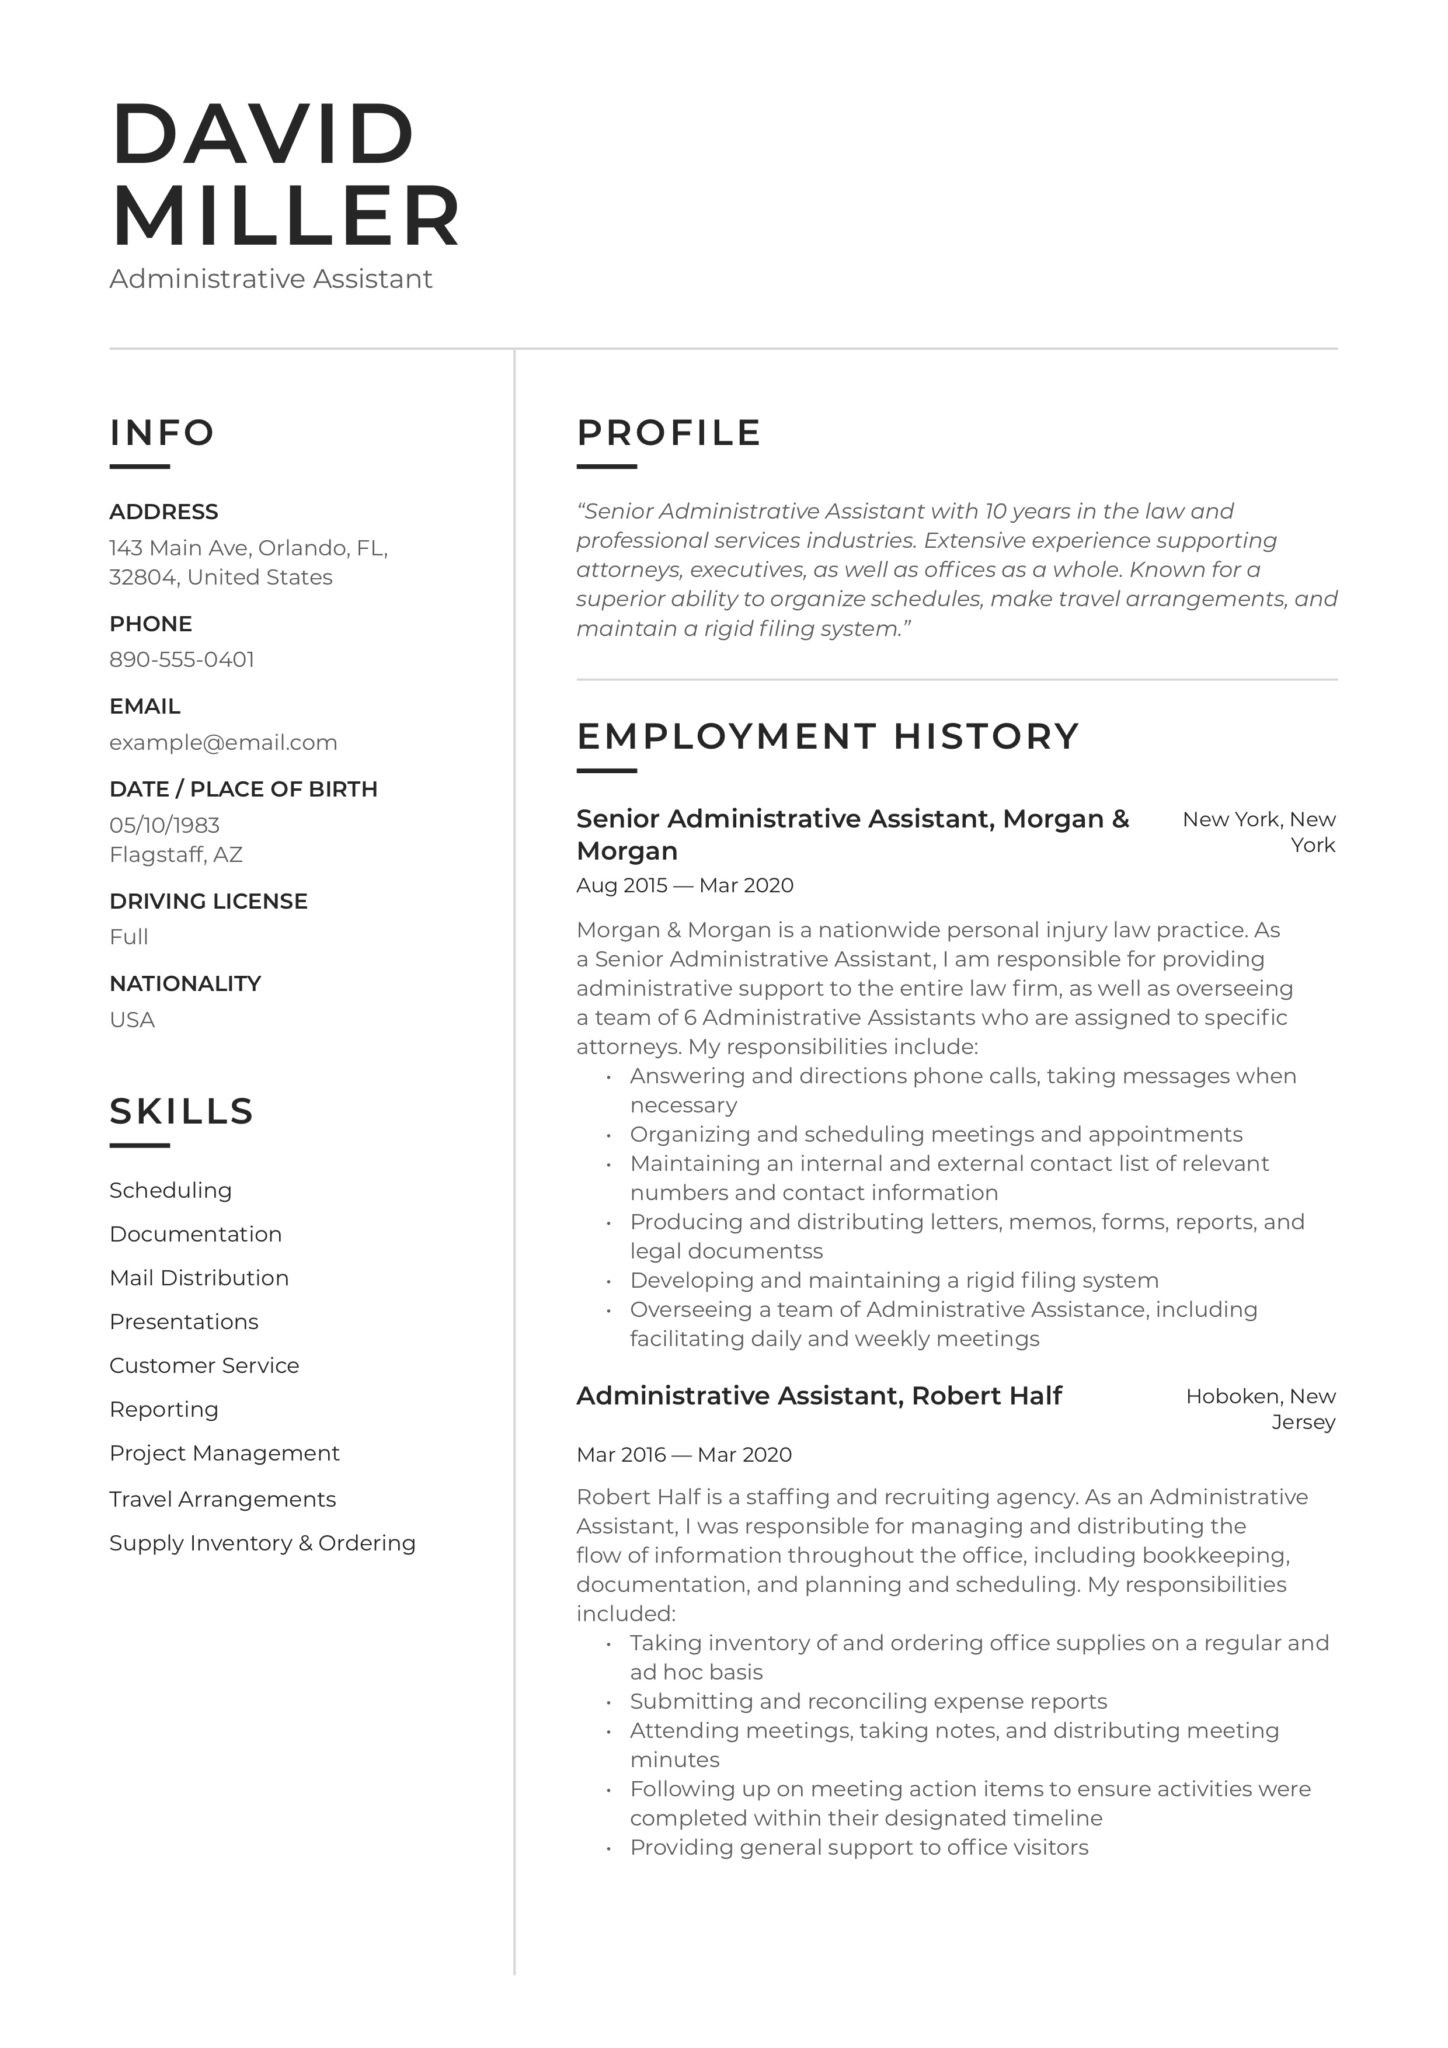 Sample Resume for Senior Administrative Officer 19 Administrative assistant Resumes & Guide Pdf 2022